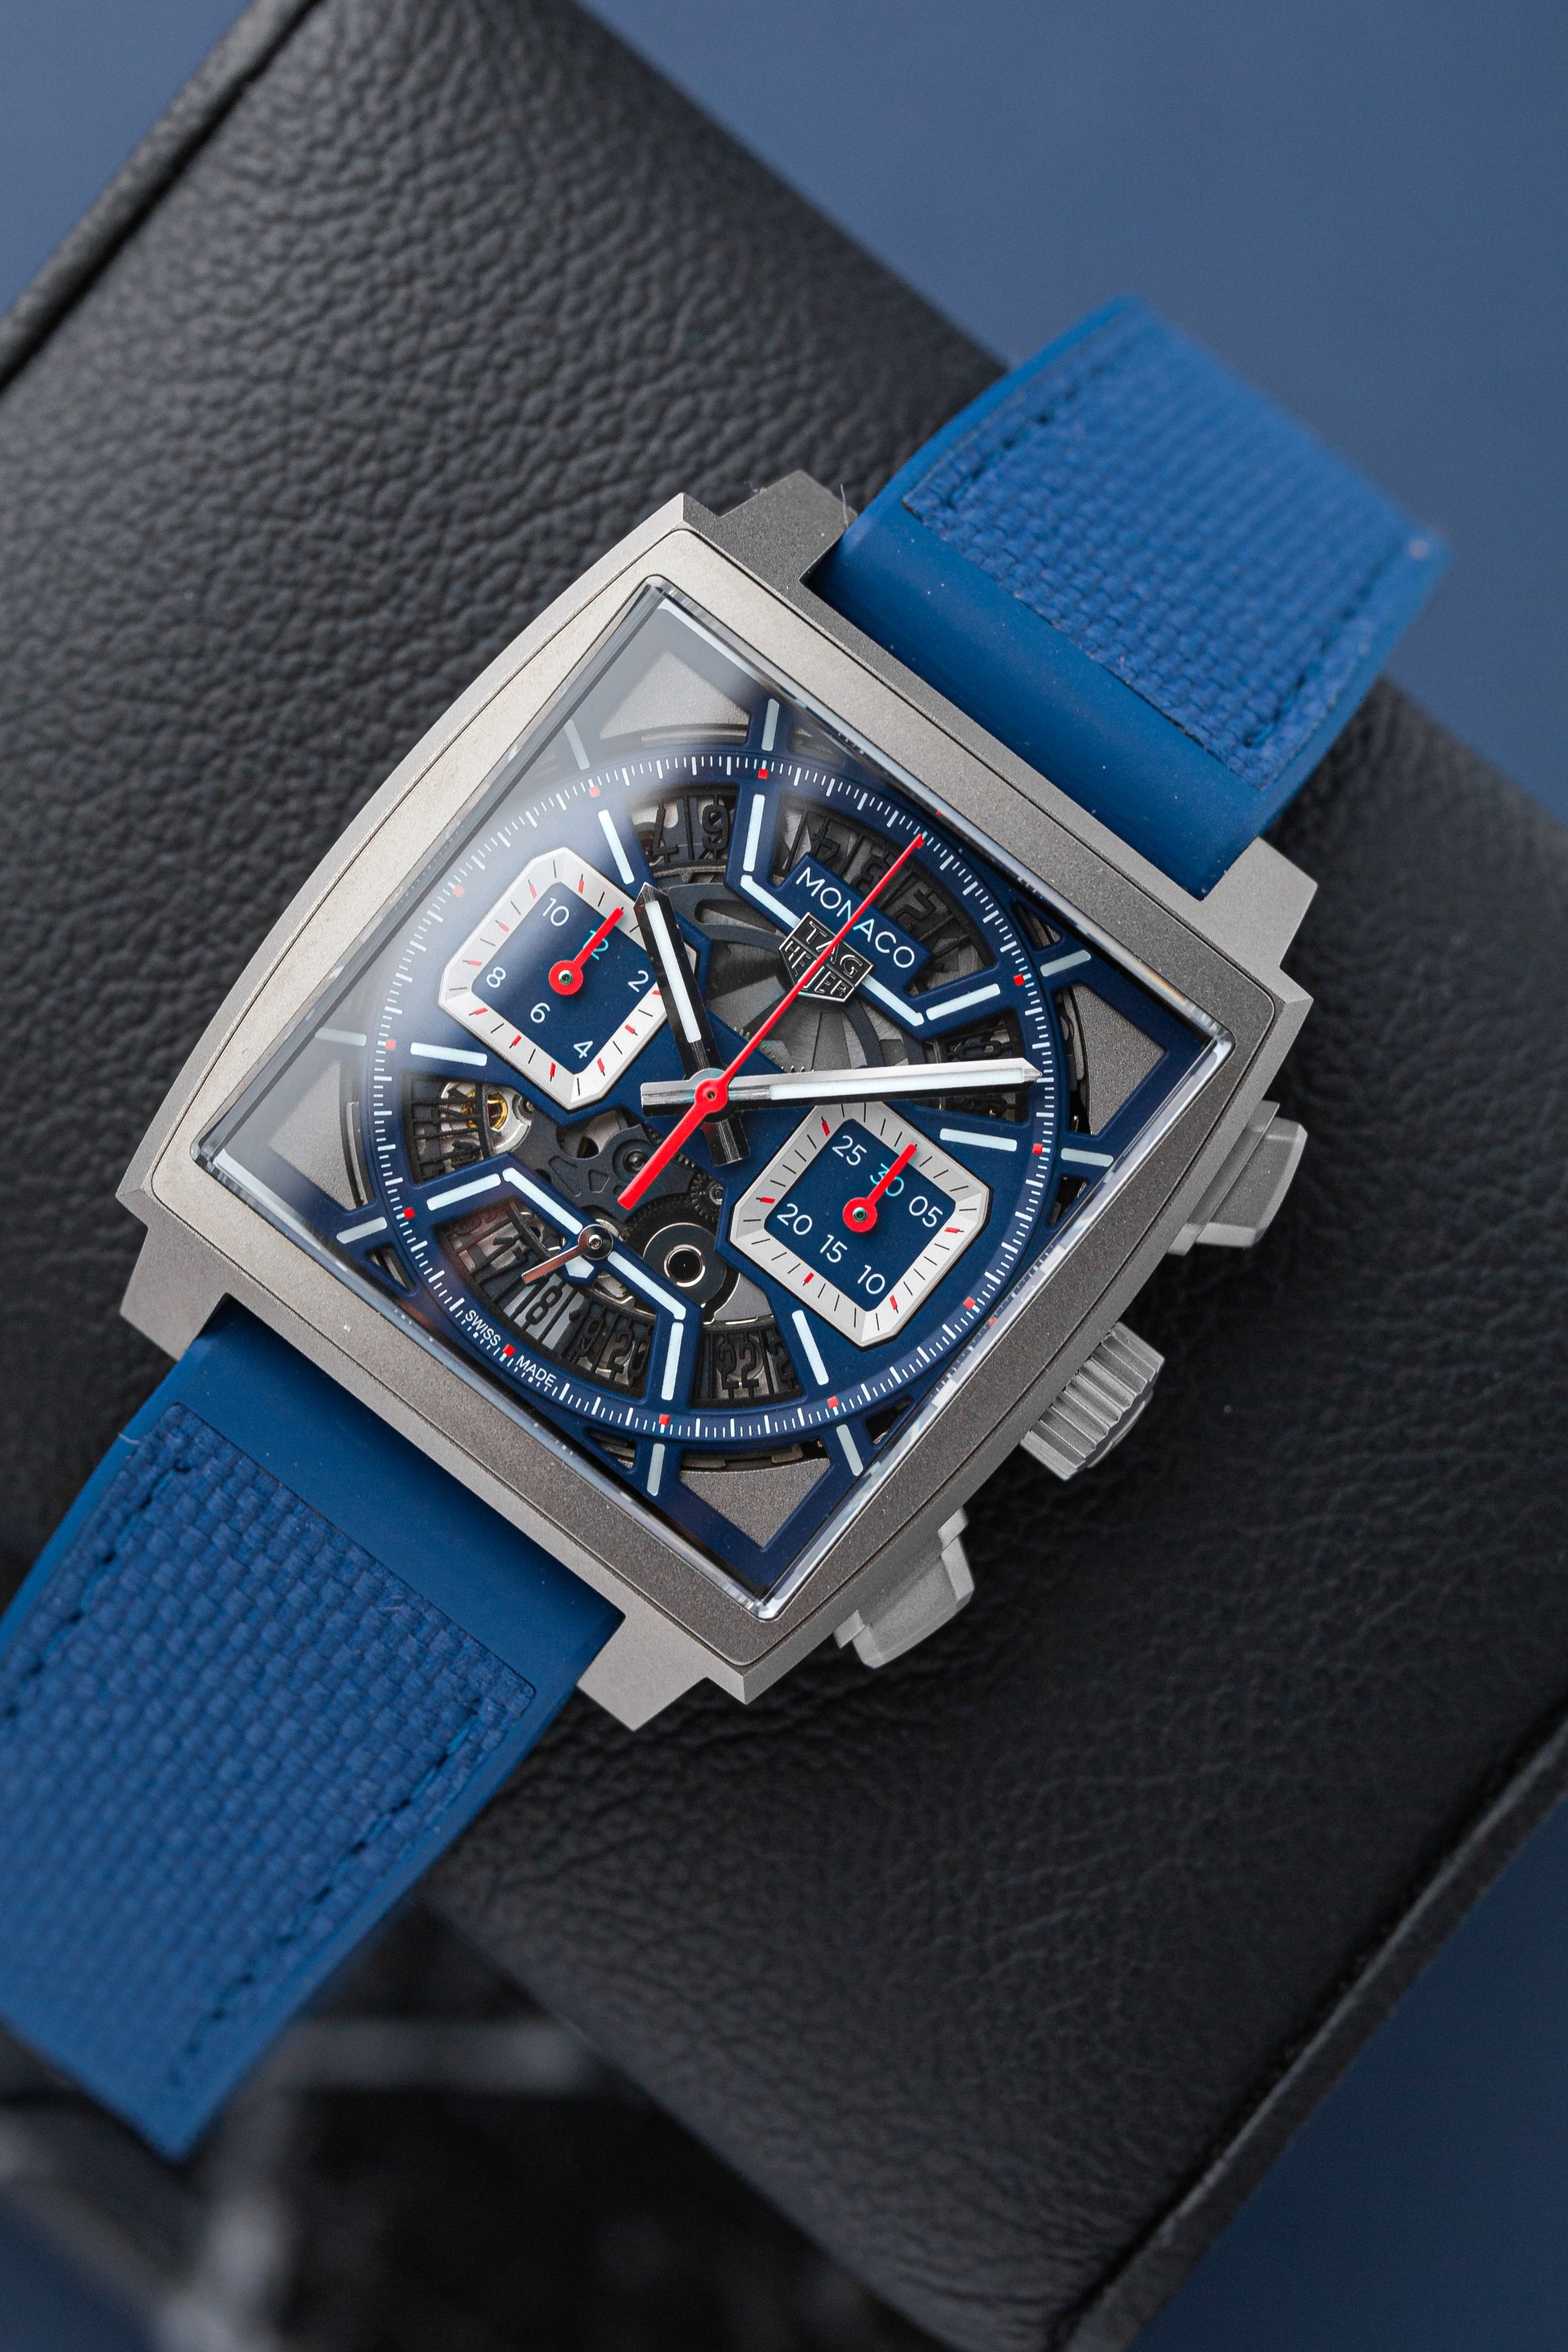 Tag Heuer Monaco Chronograph 39mm Watch - Blue Dial - Blue Rubber & Leather Band - Titanium Square Case